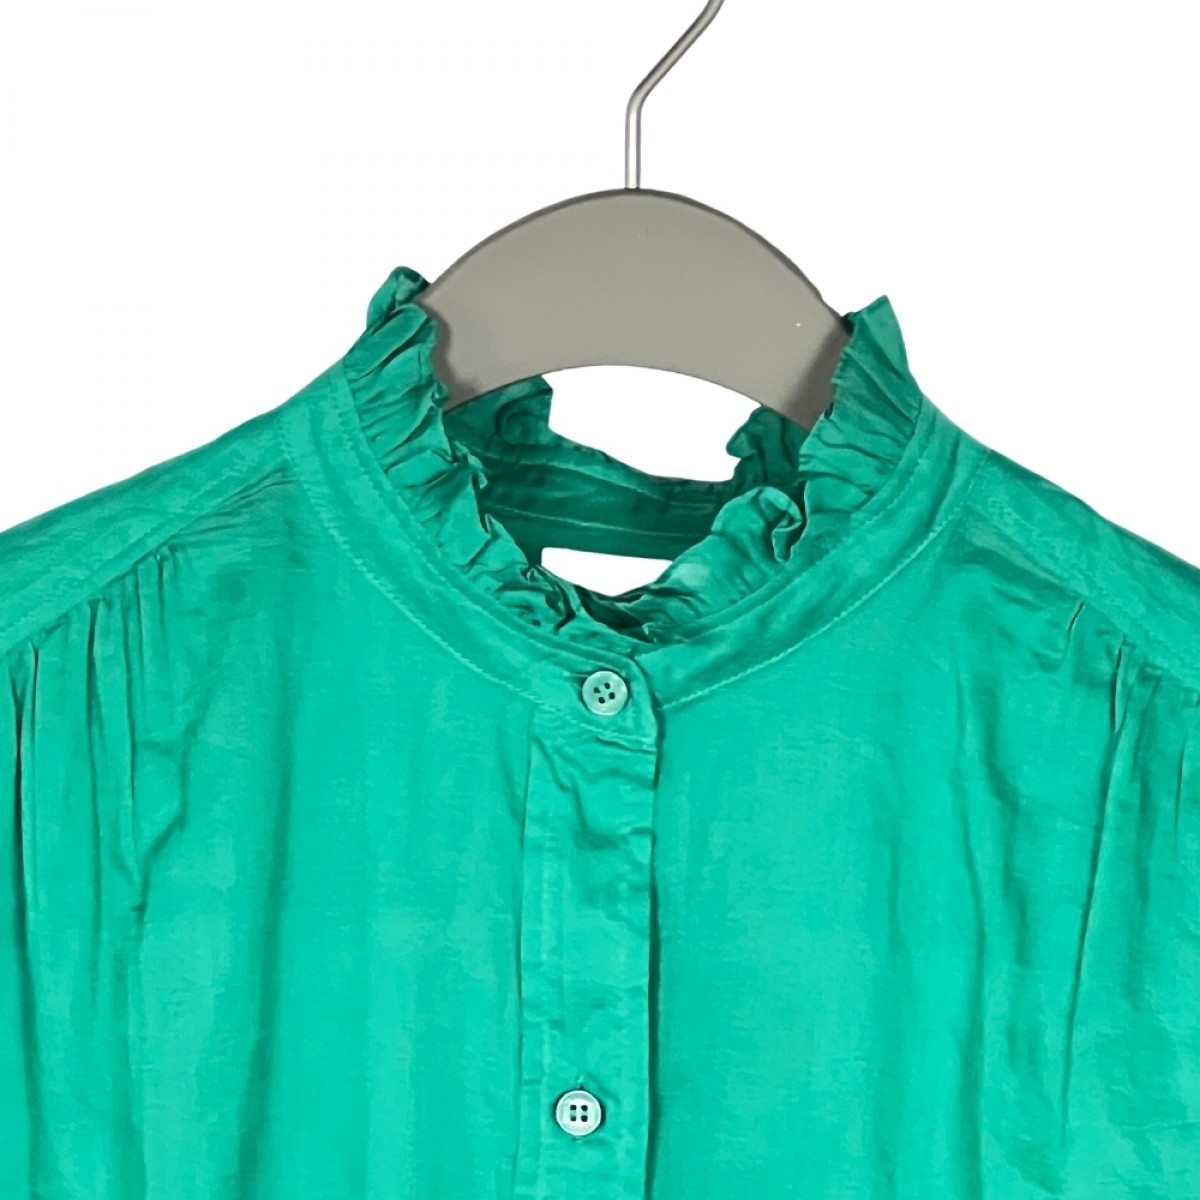 gamble shirt - emerald - krave 